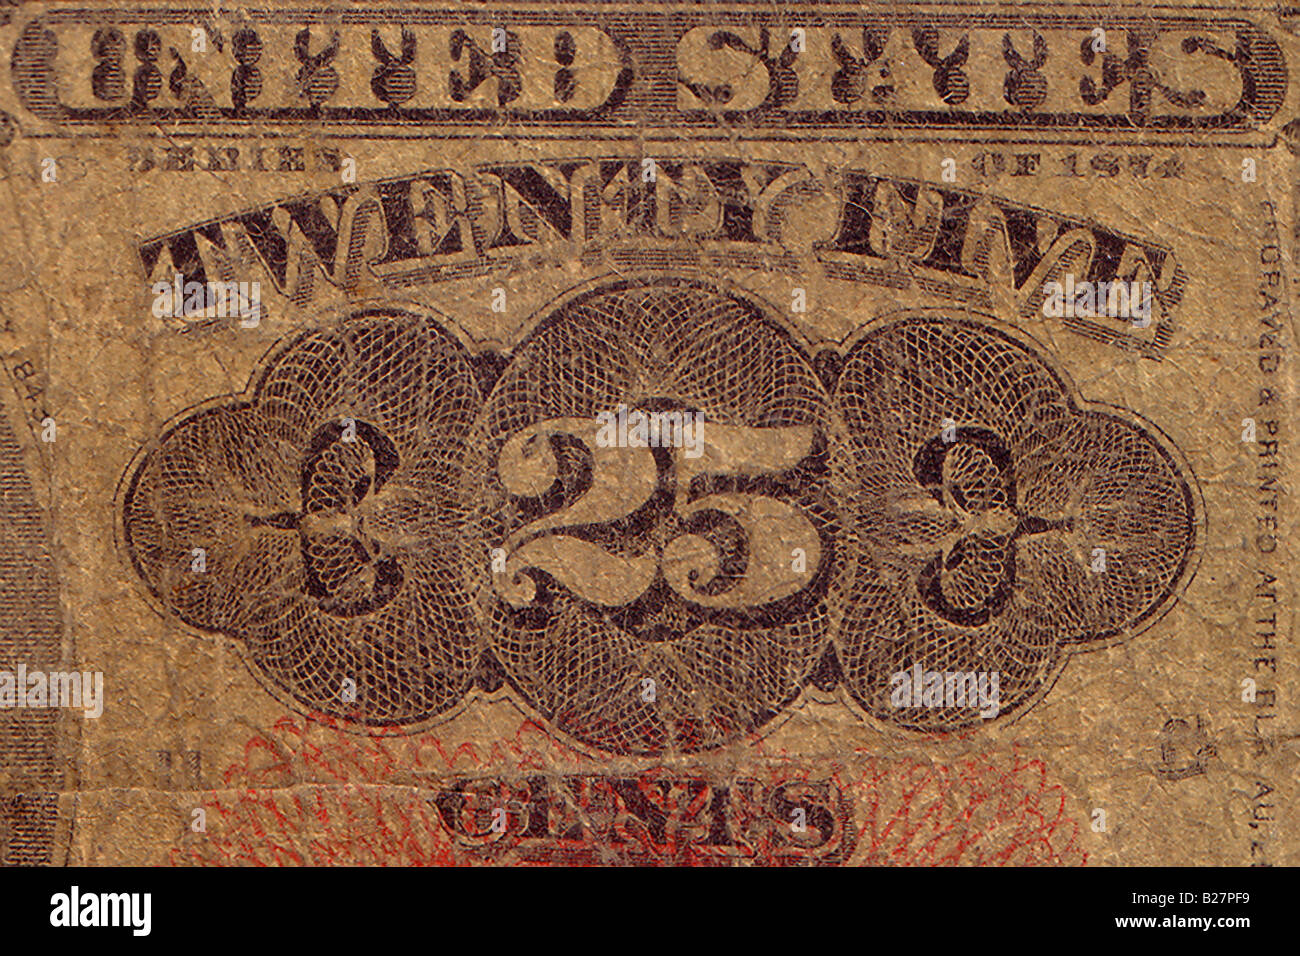 US 19th Century 25-cent bill detail Stock Photo